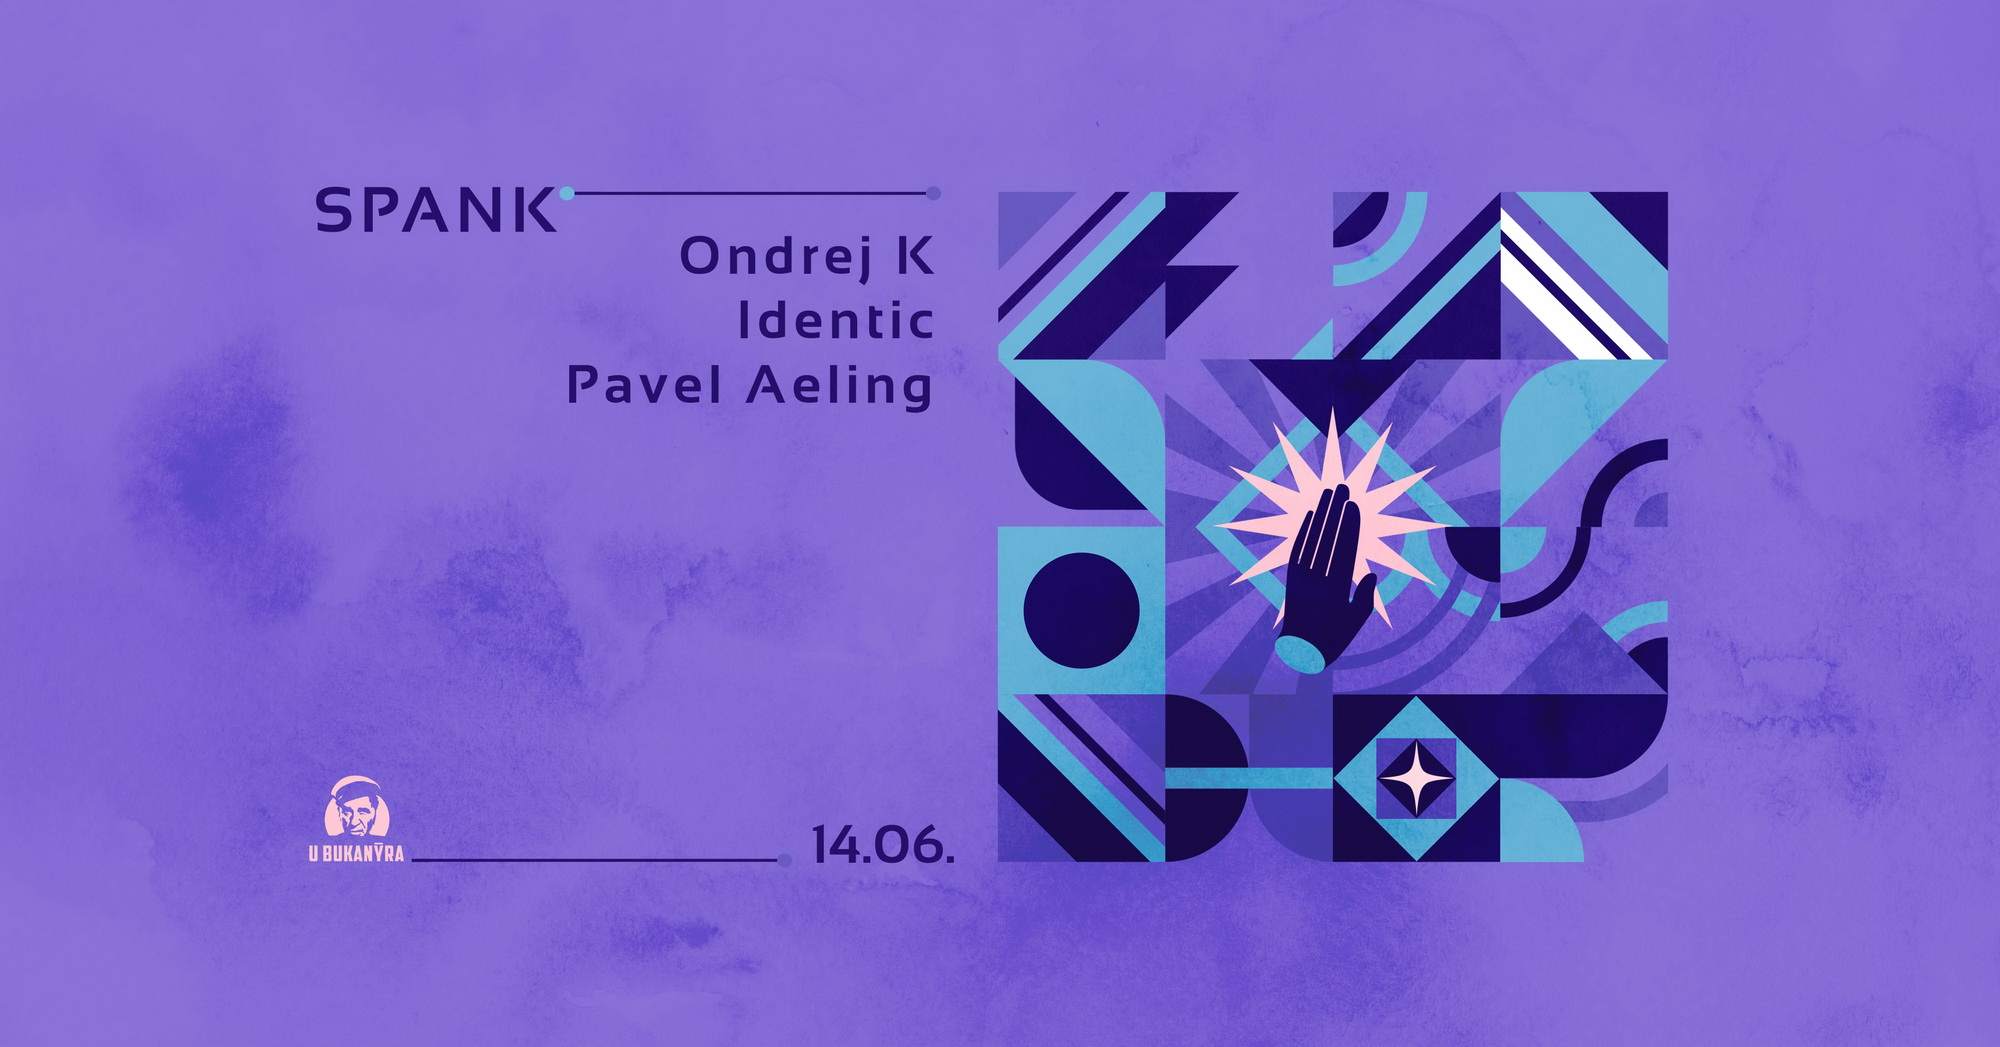 SPANK - djs Identic, Ondrej K, Pavel Aeling - フライヤー表